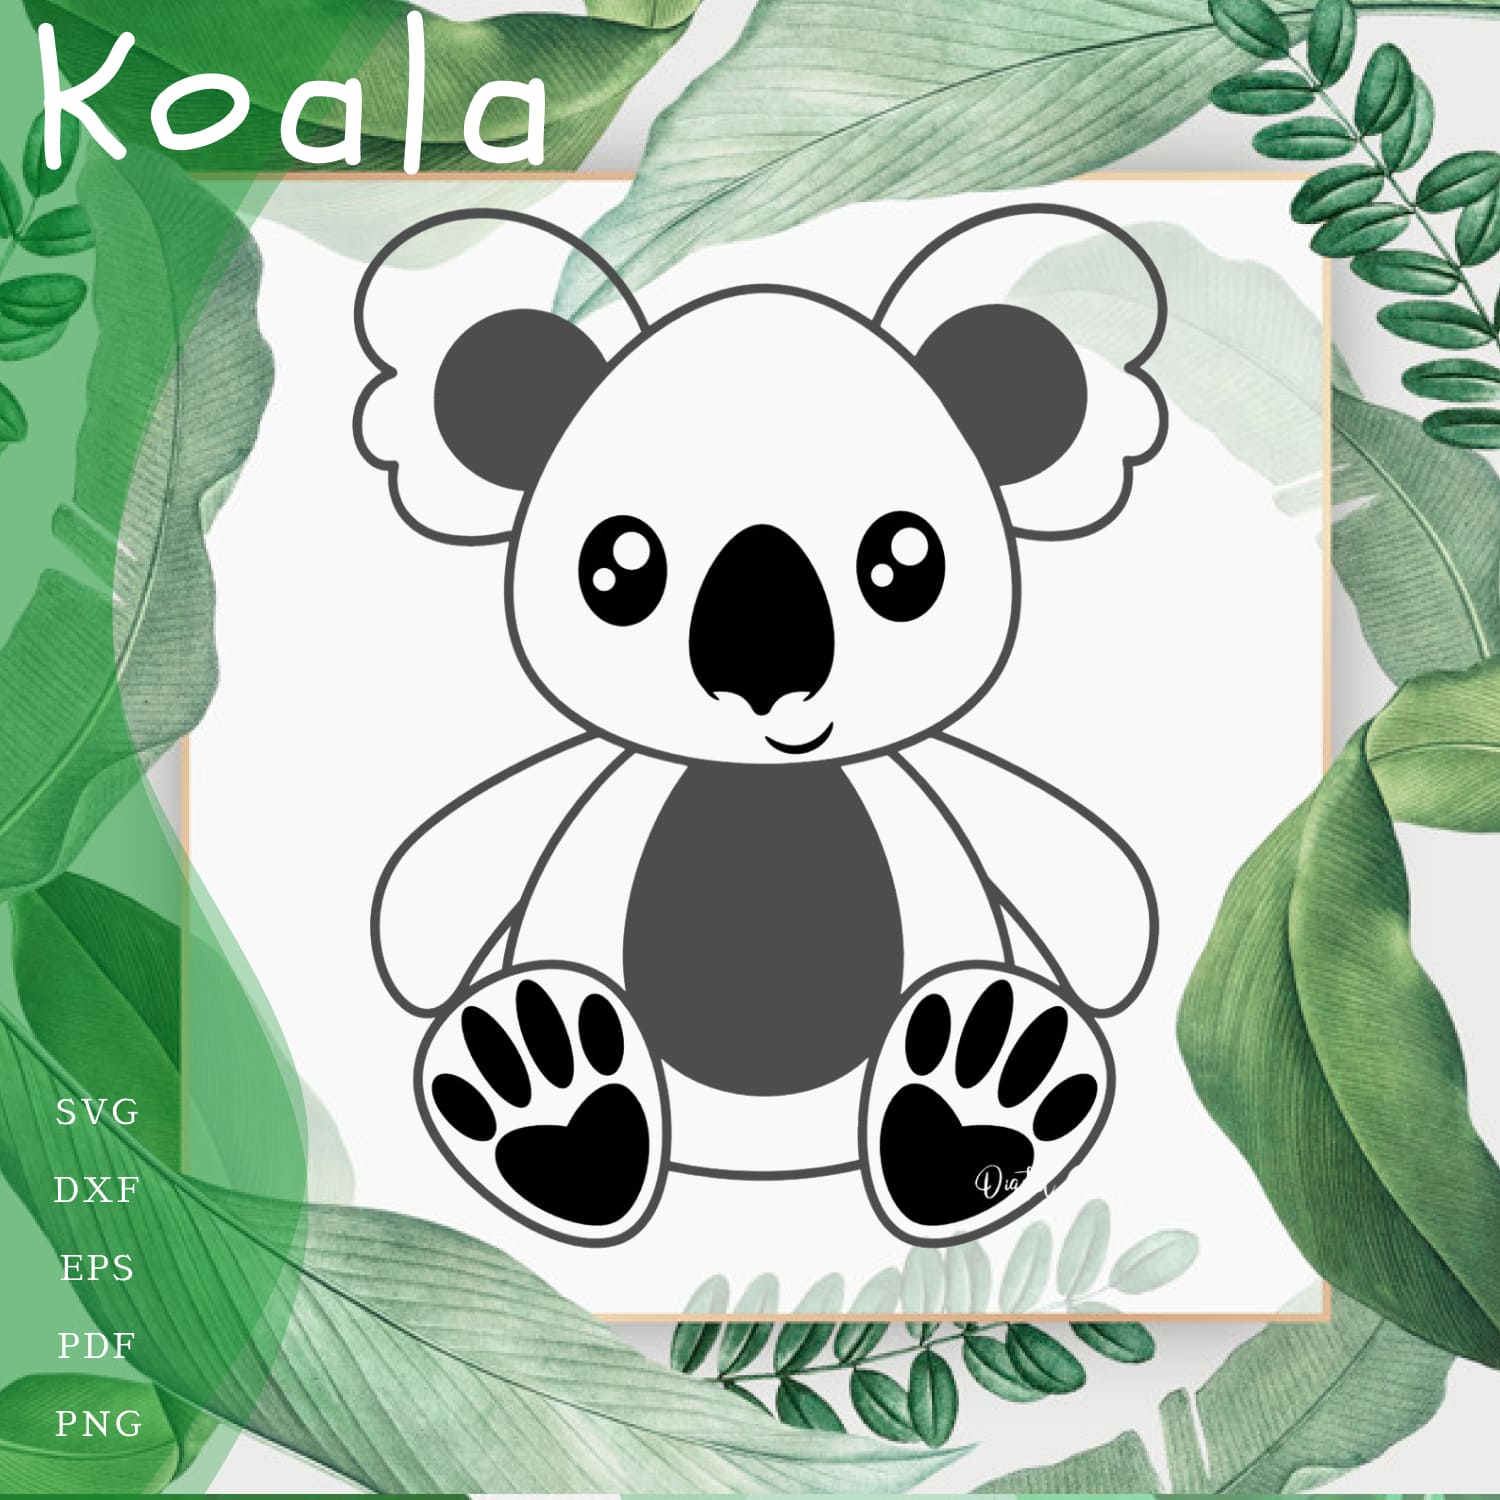 Koala SVG / PNG / EPS / DXF Files.